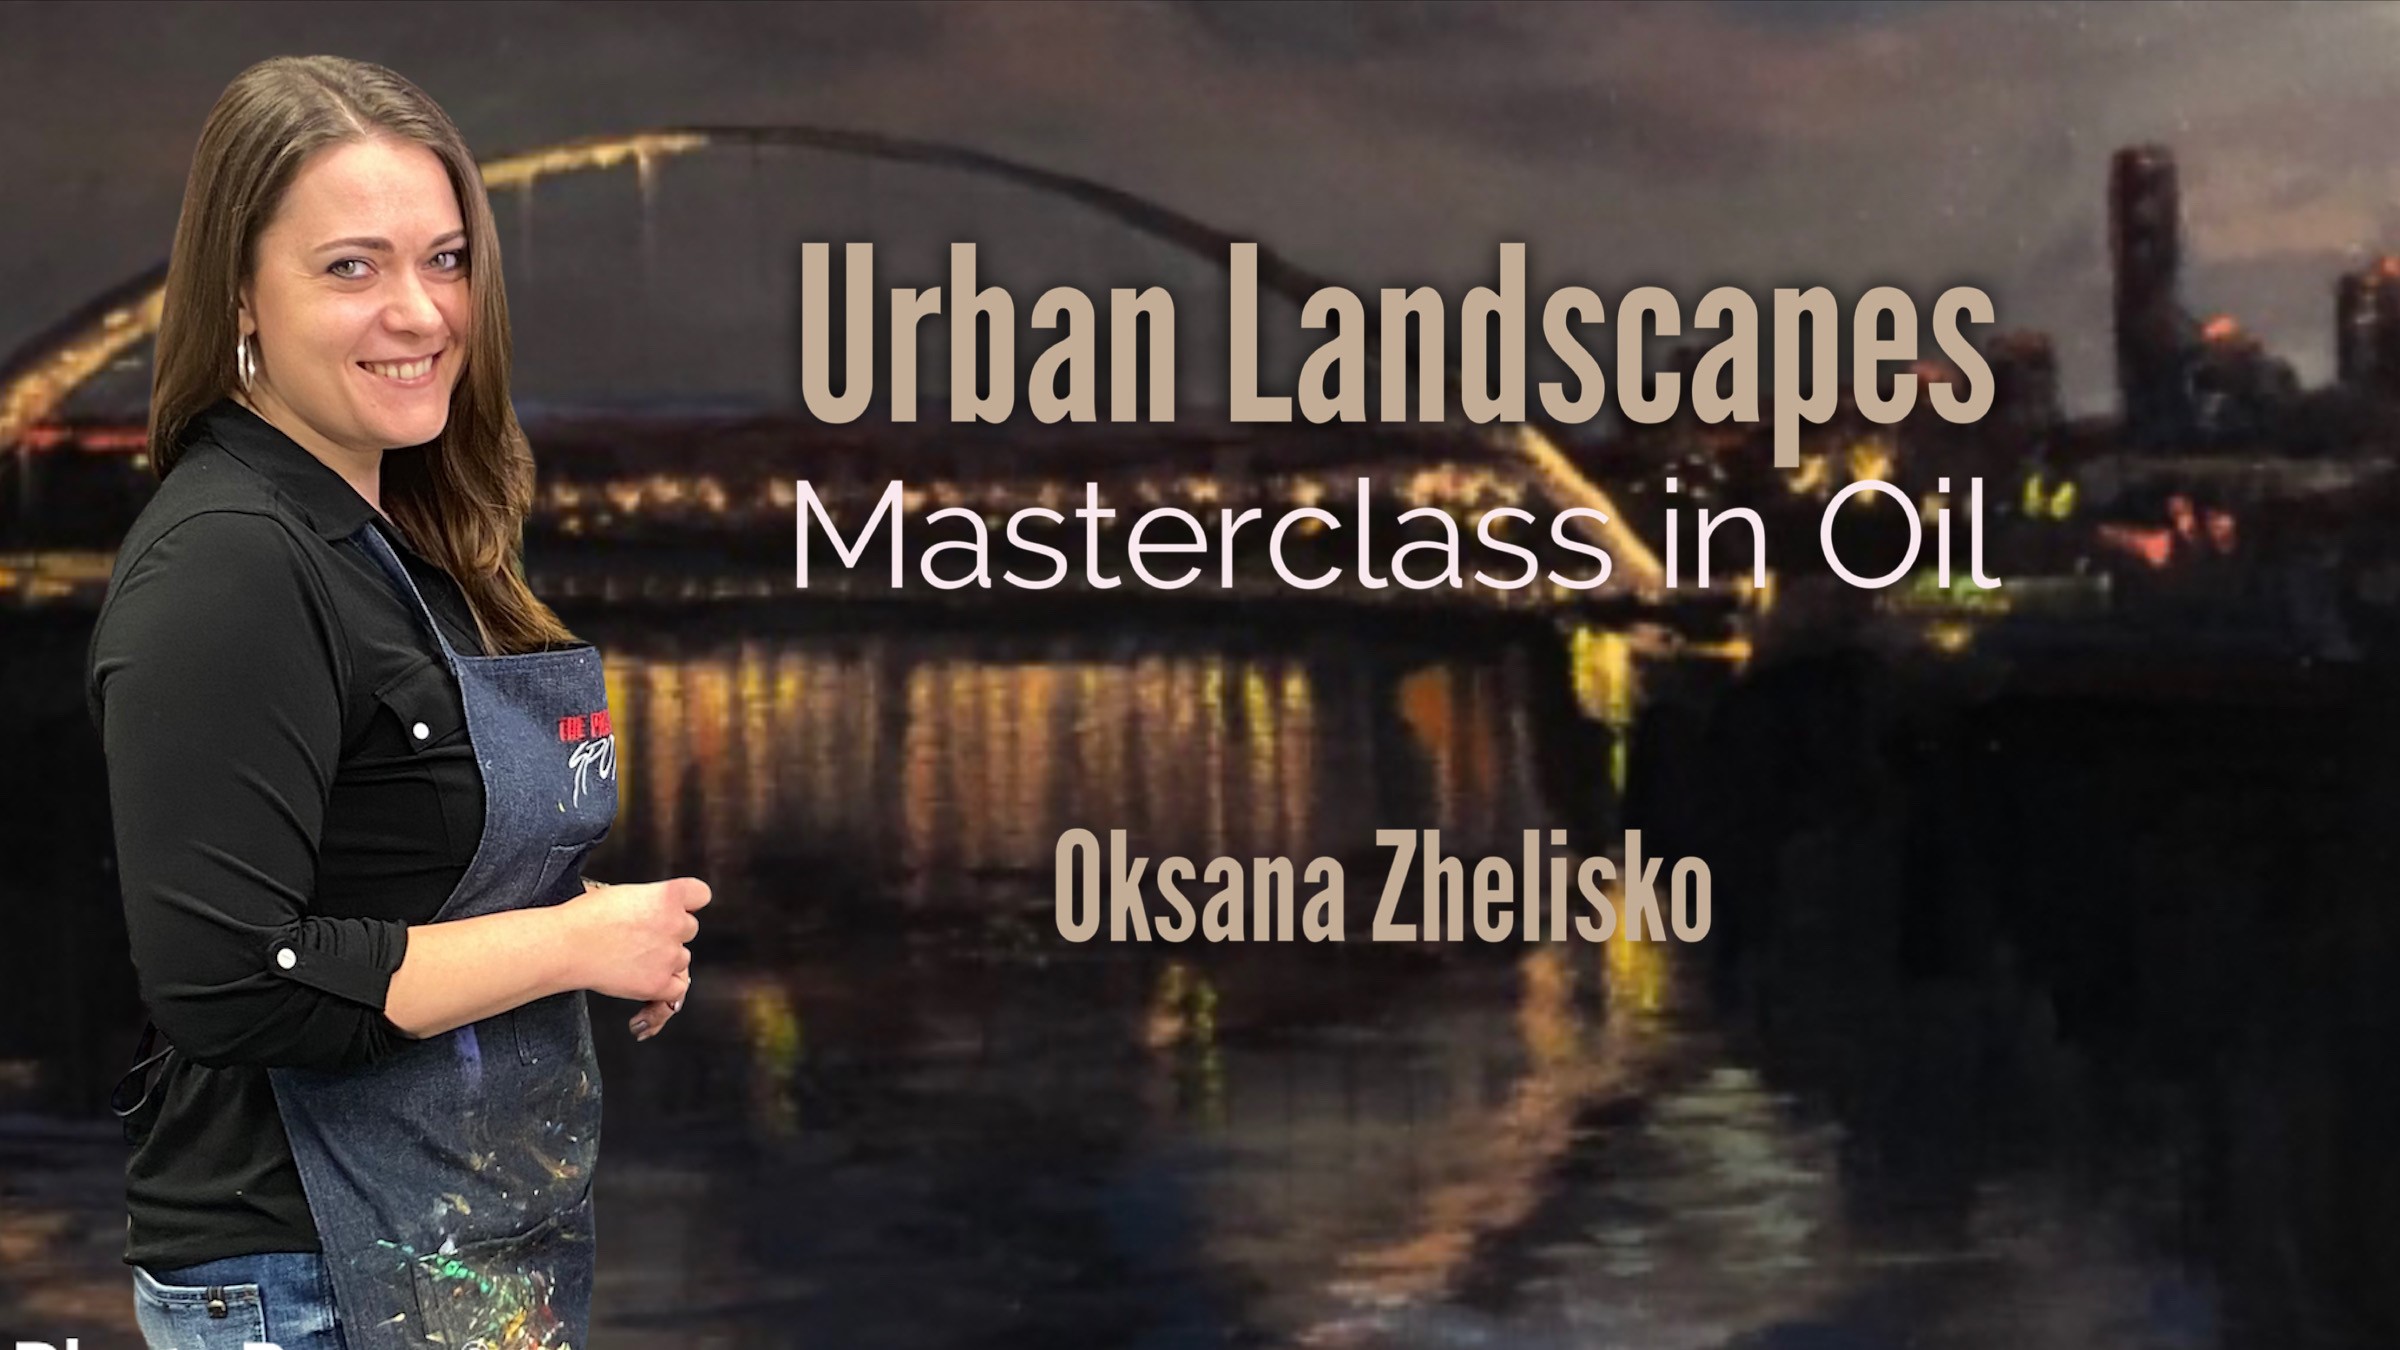 Urban Landscape Masterclass